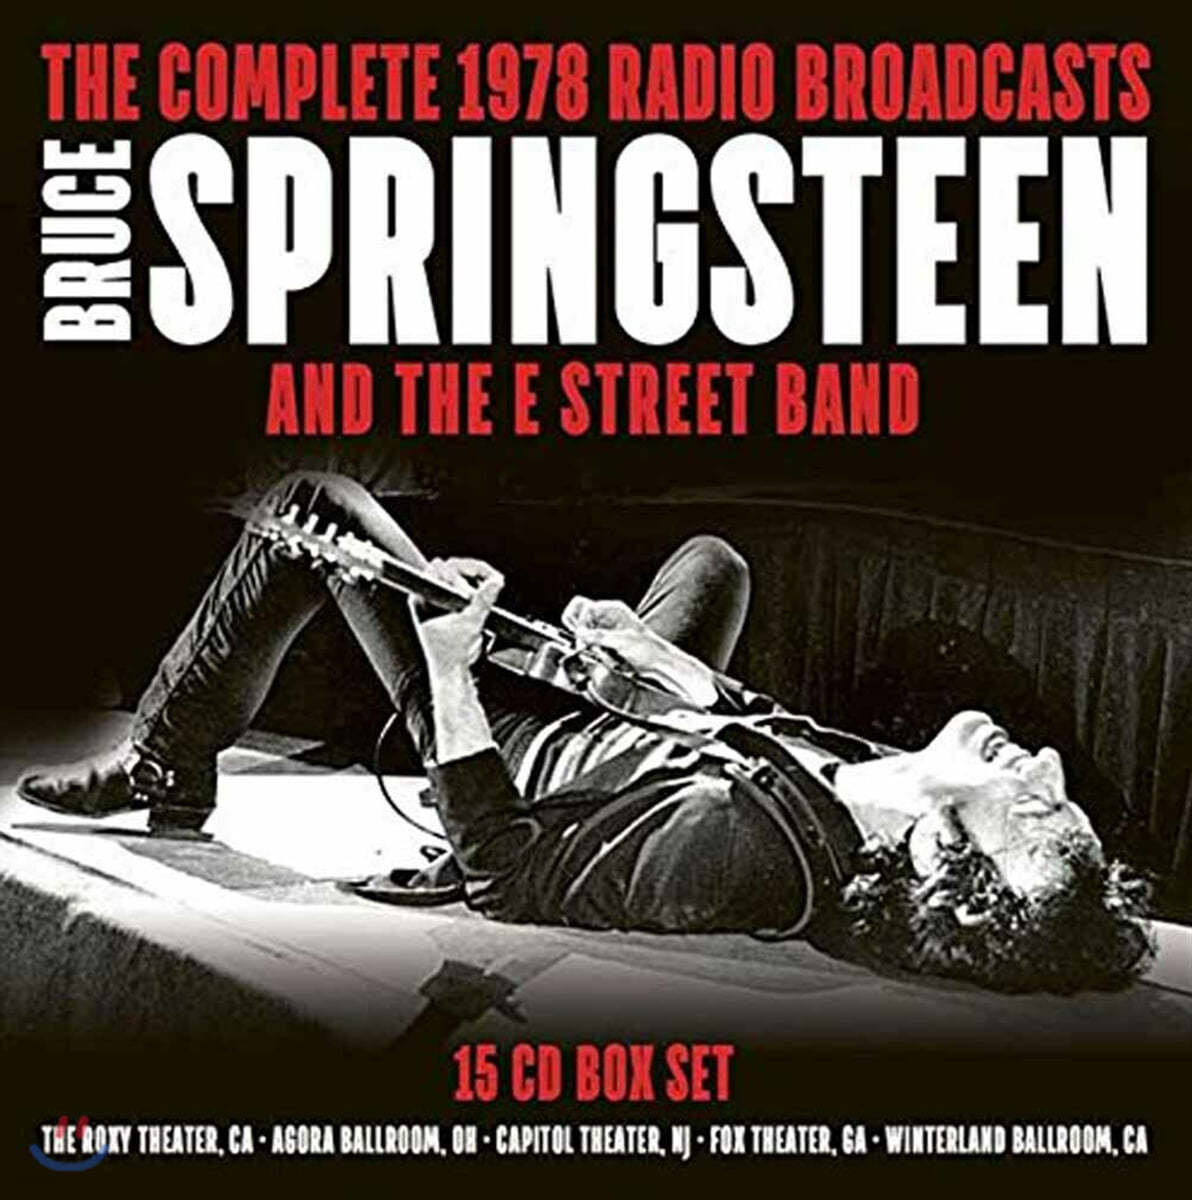 Bruce Sprinsteen &amp; The E Street Band (브루스 스프링스틴, E 스트리트 밴드) - The Complete 1978 Radio Broadcasts